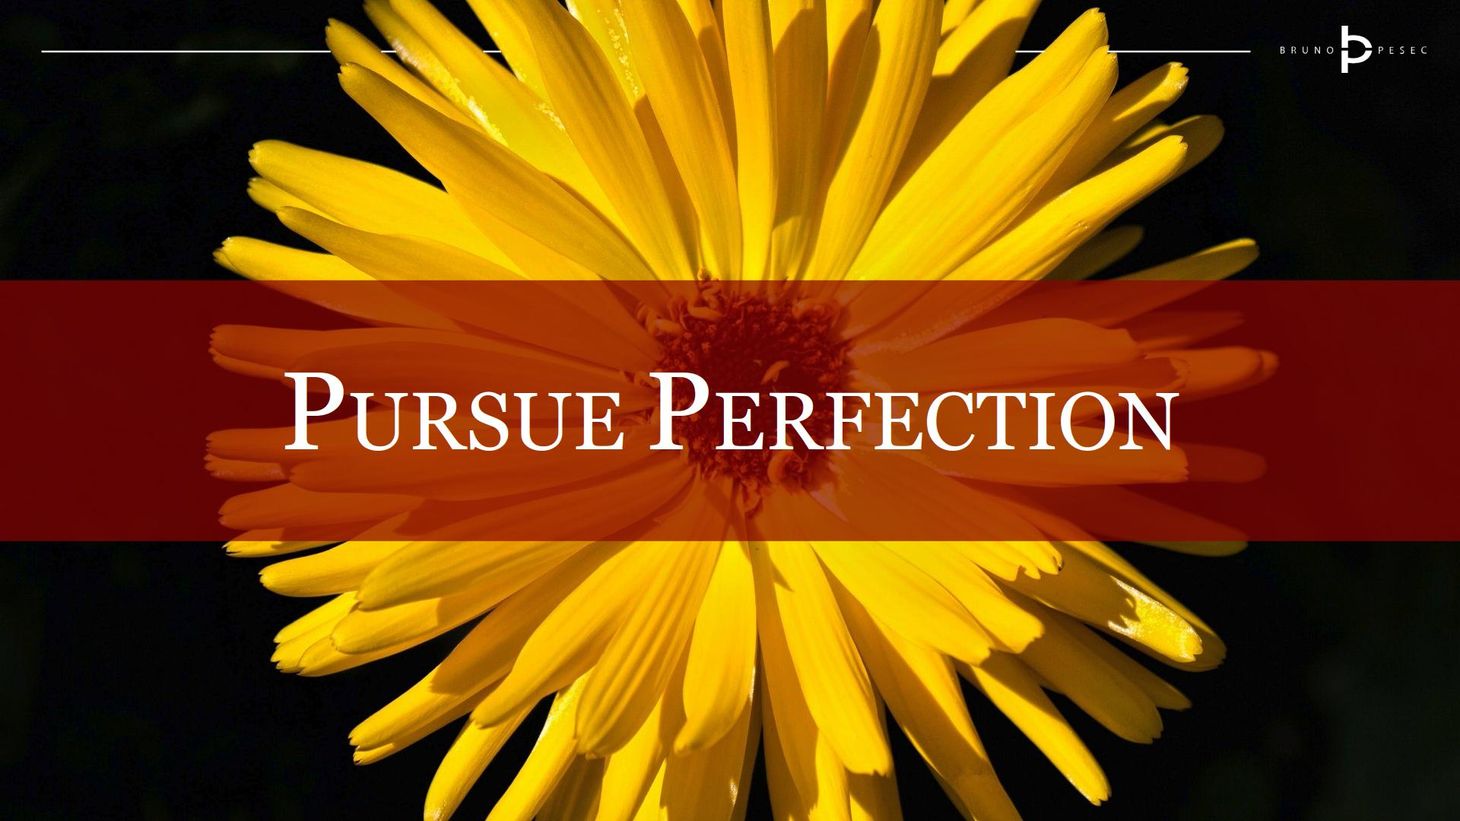 Pursue perfection